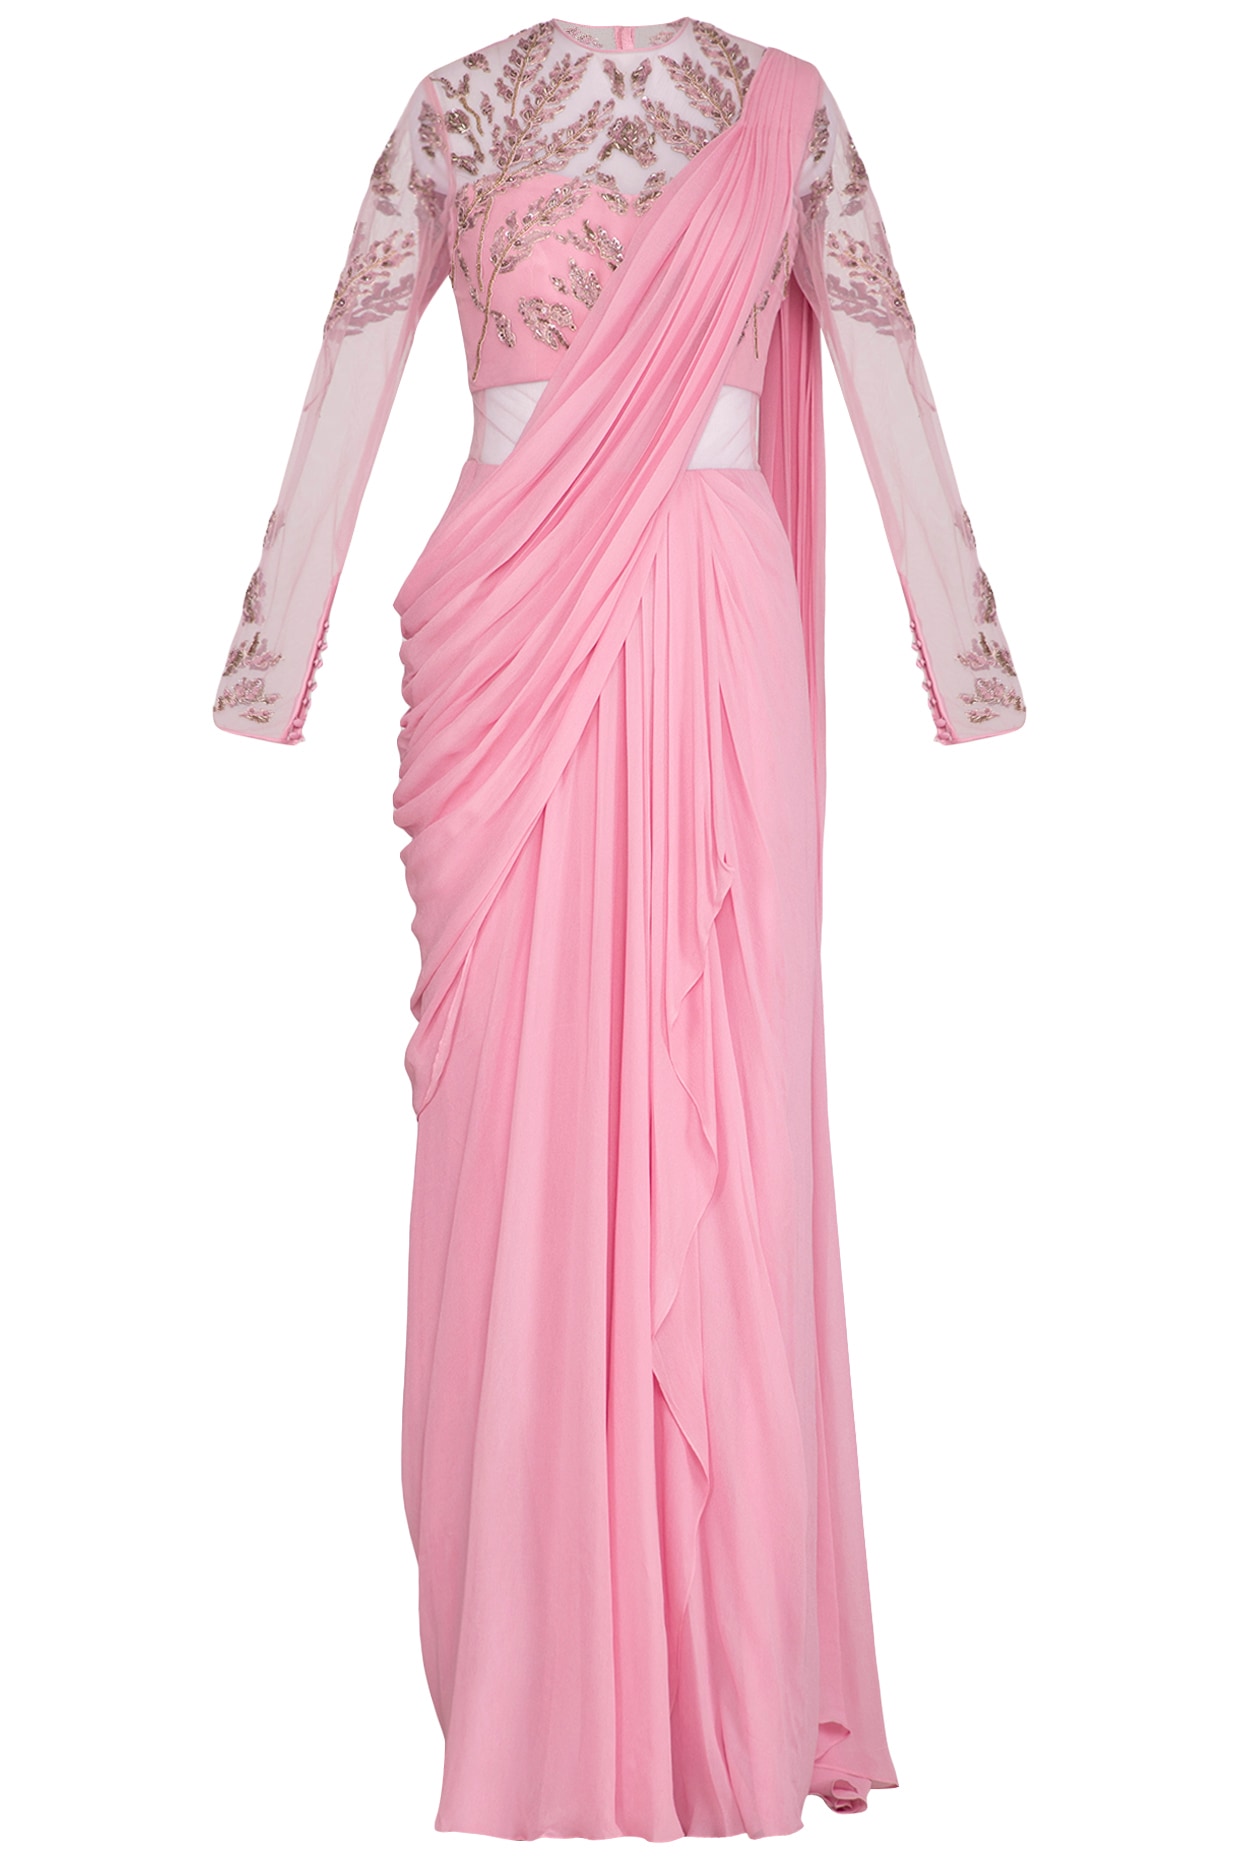 saree gown design